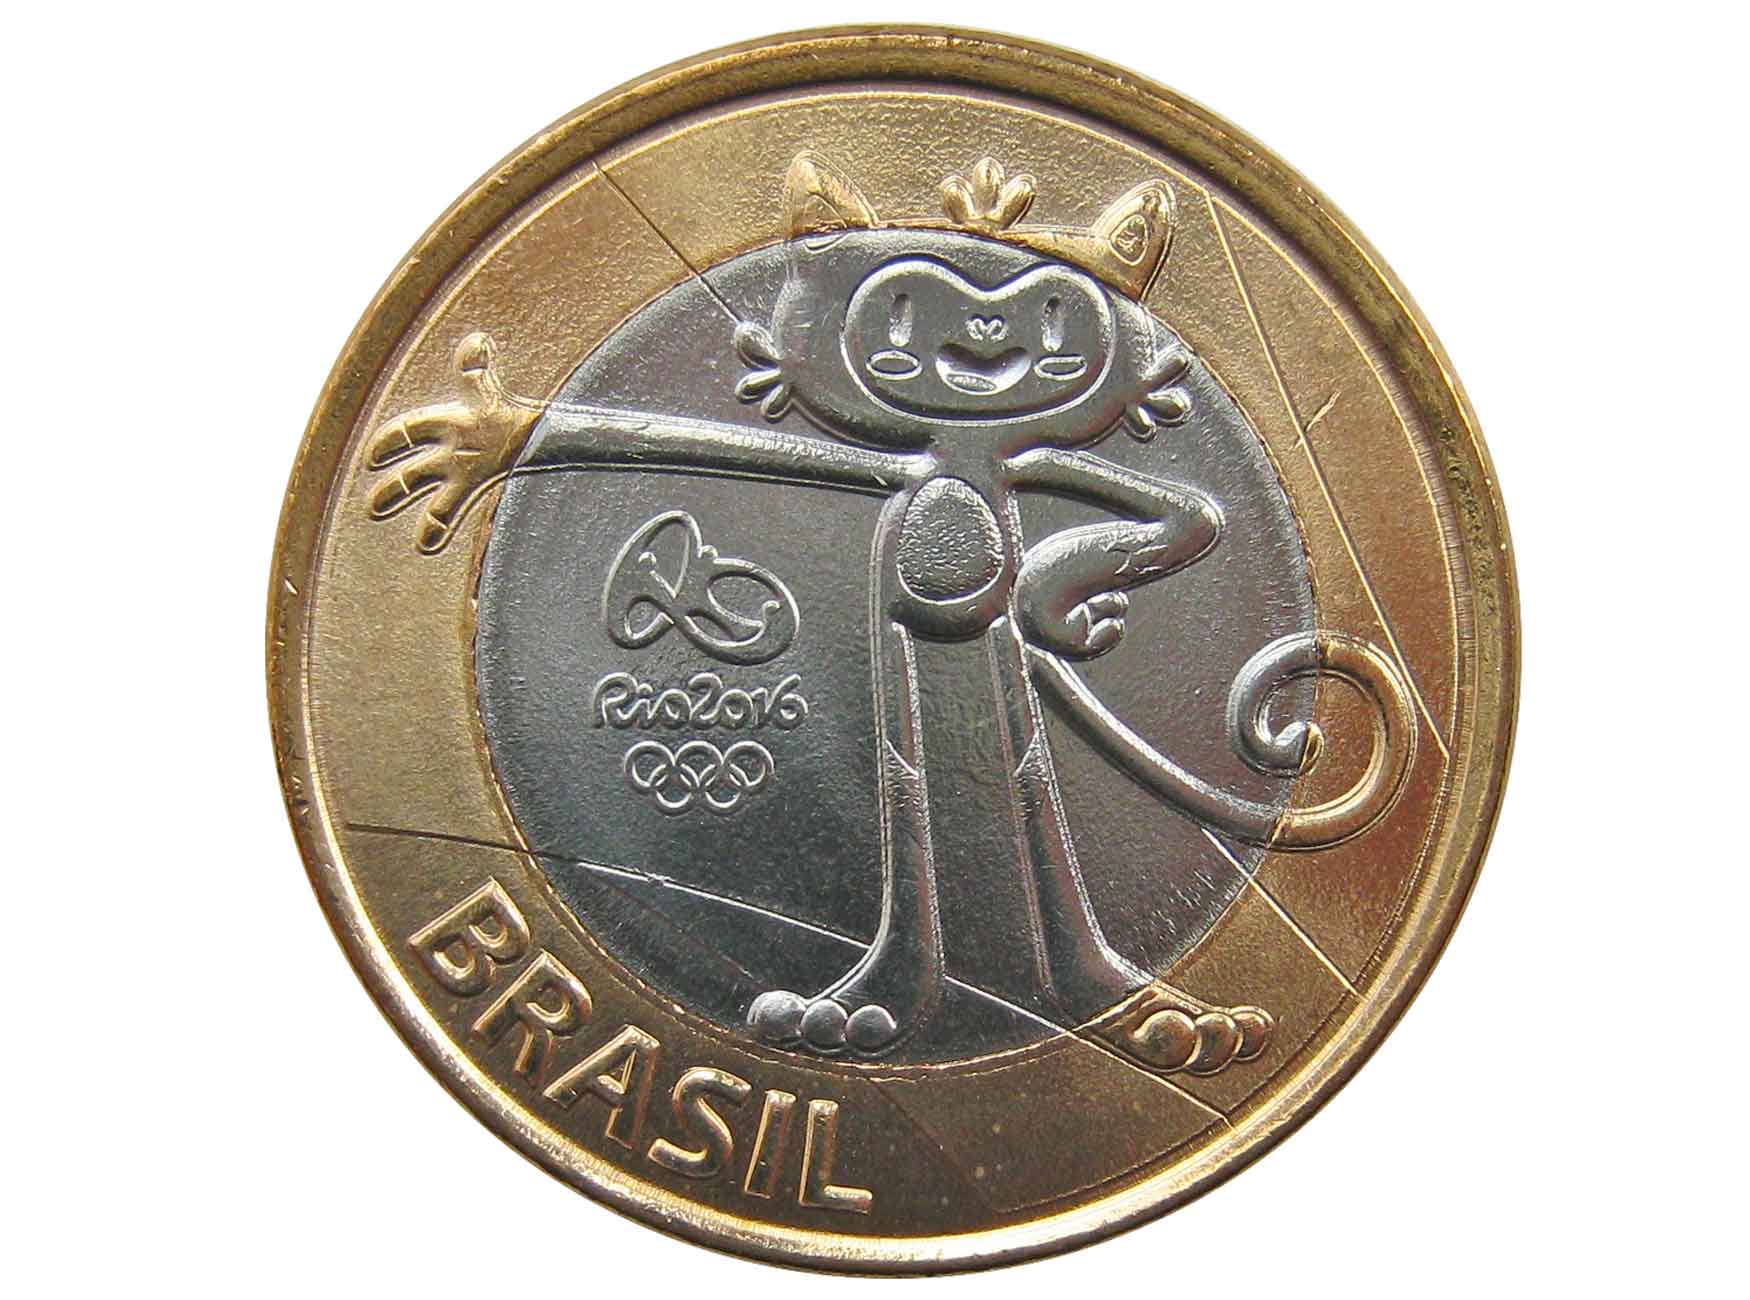 валюта бразилии